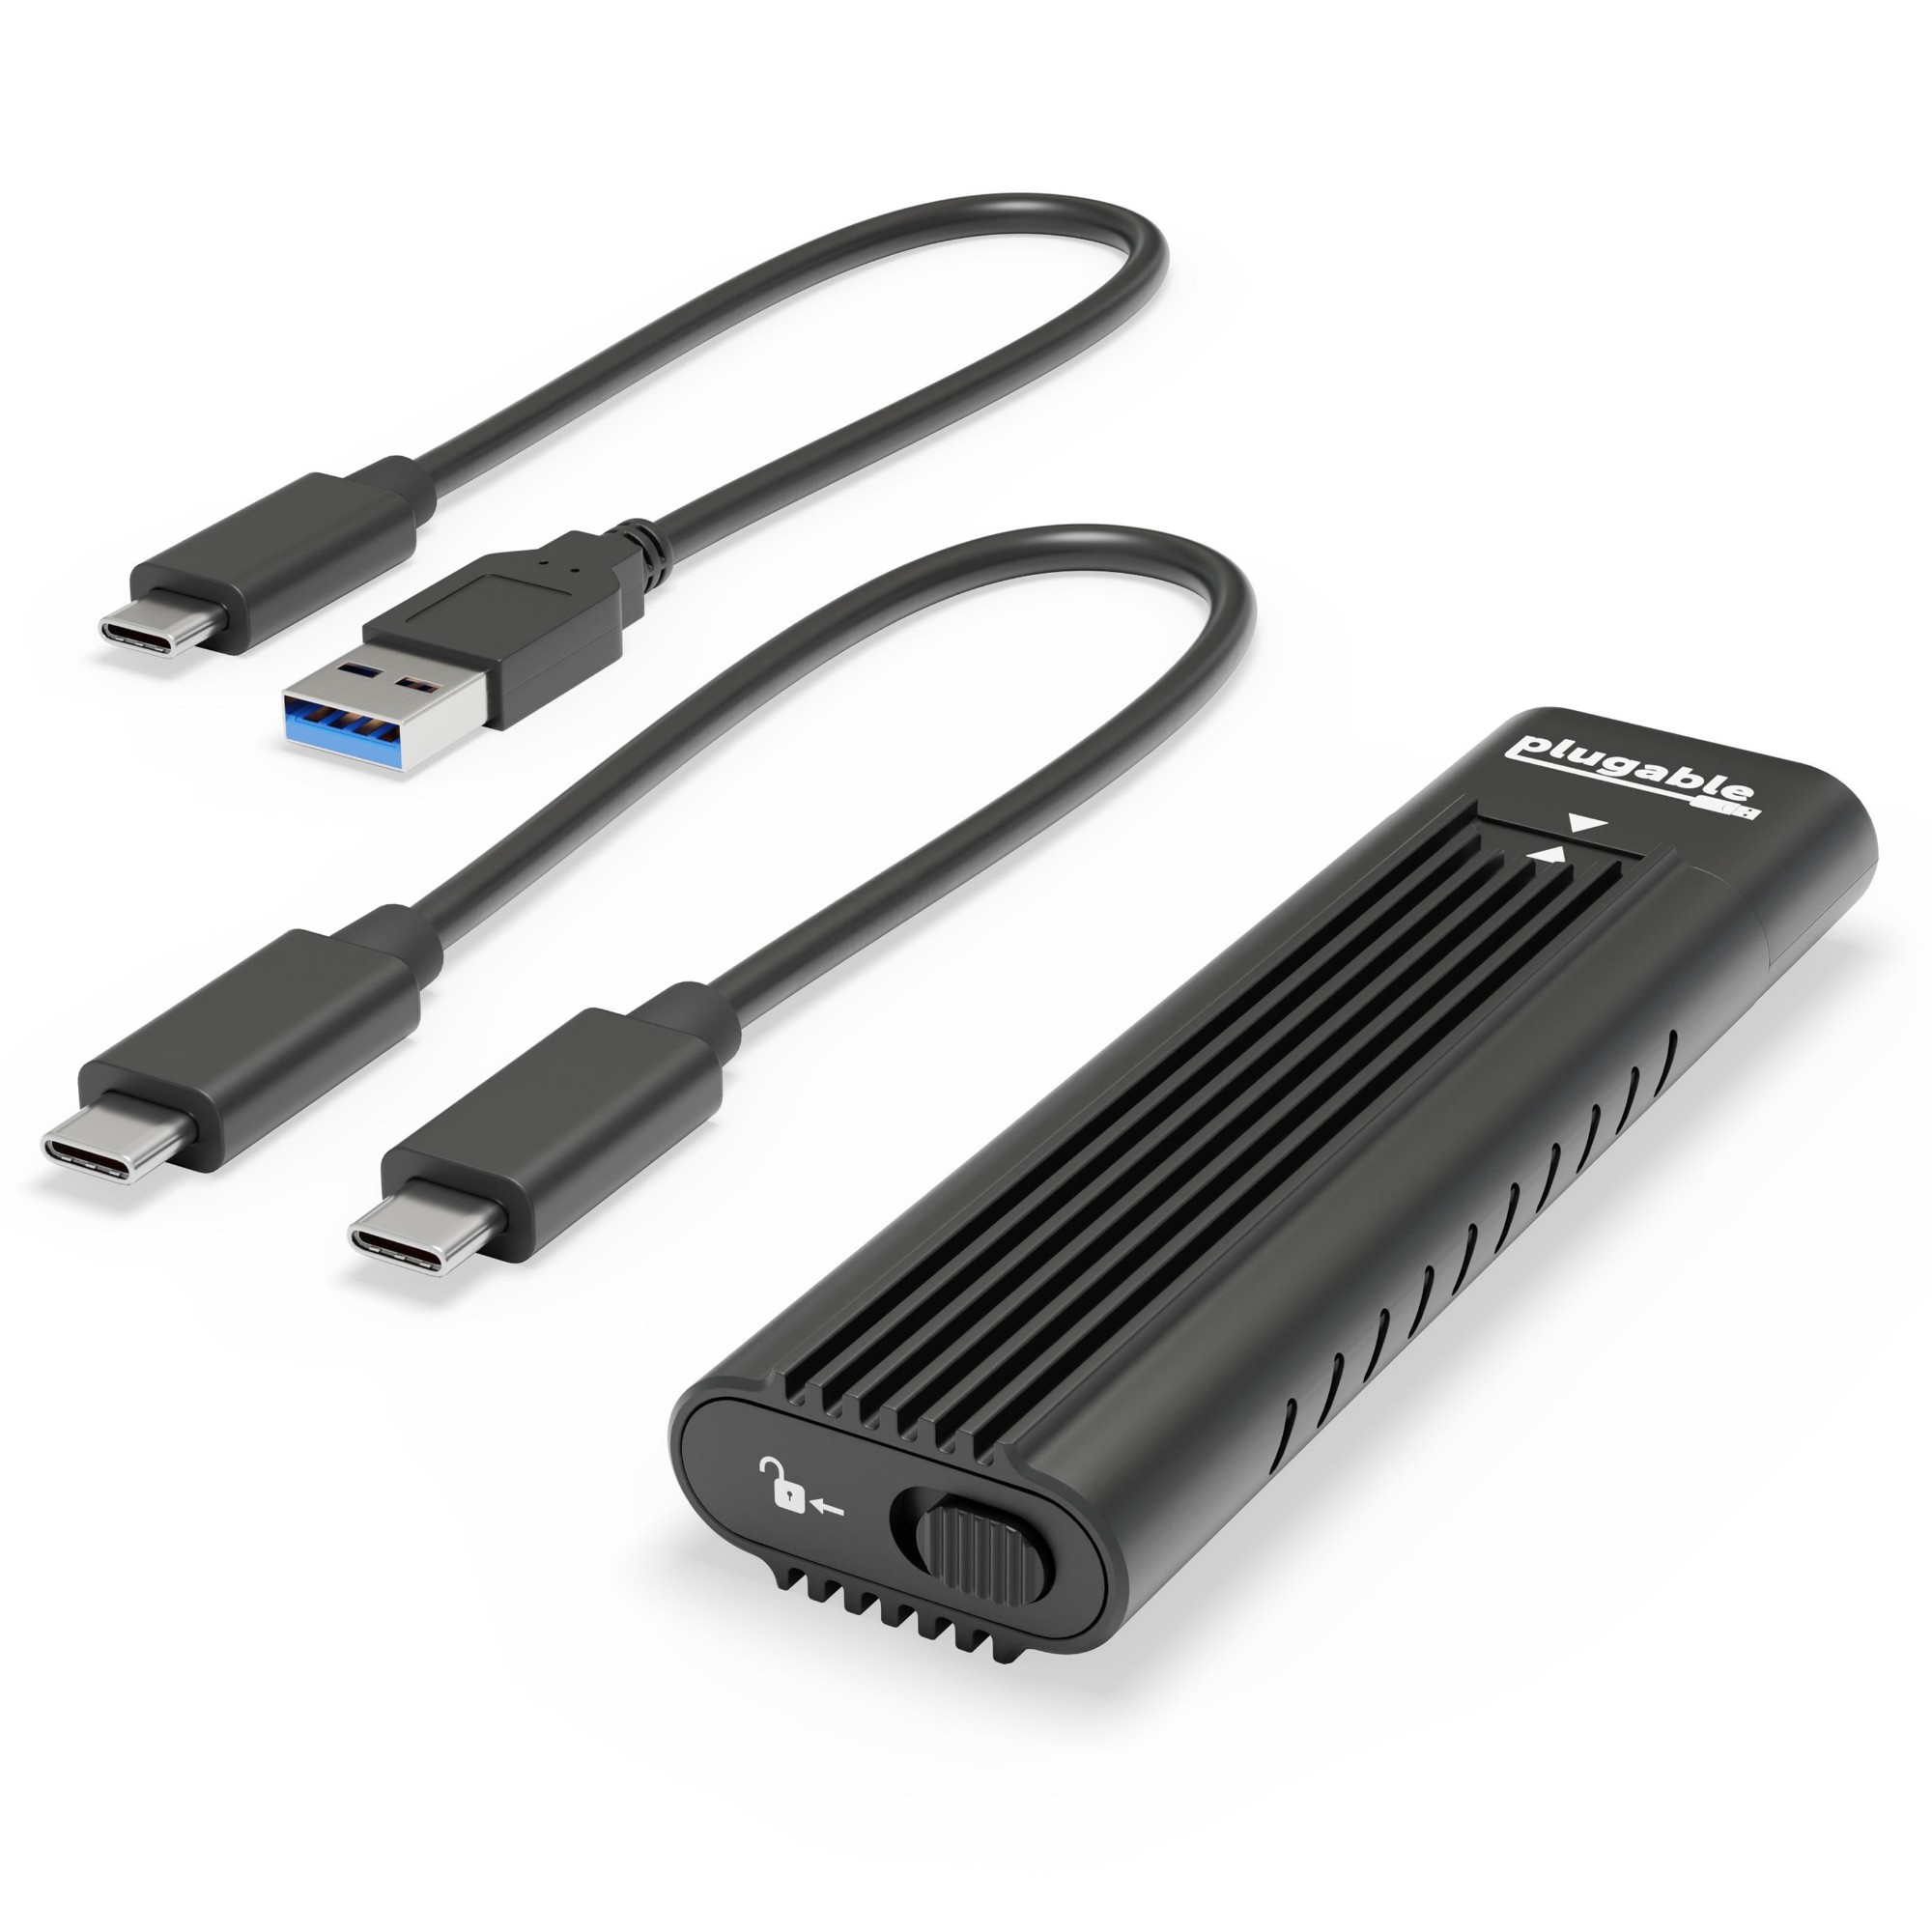 Plugable Technologies USB C to M.2 NVMe Tool-free Enclosure USB C and Thunderbolt 3